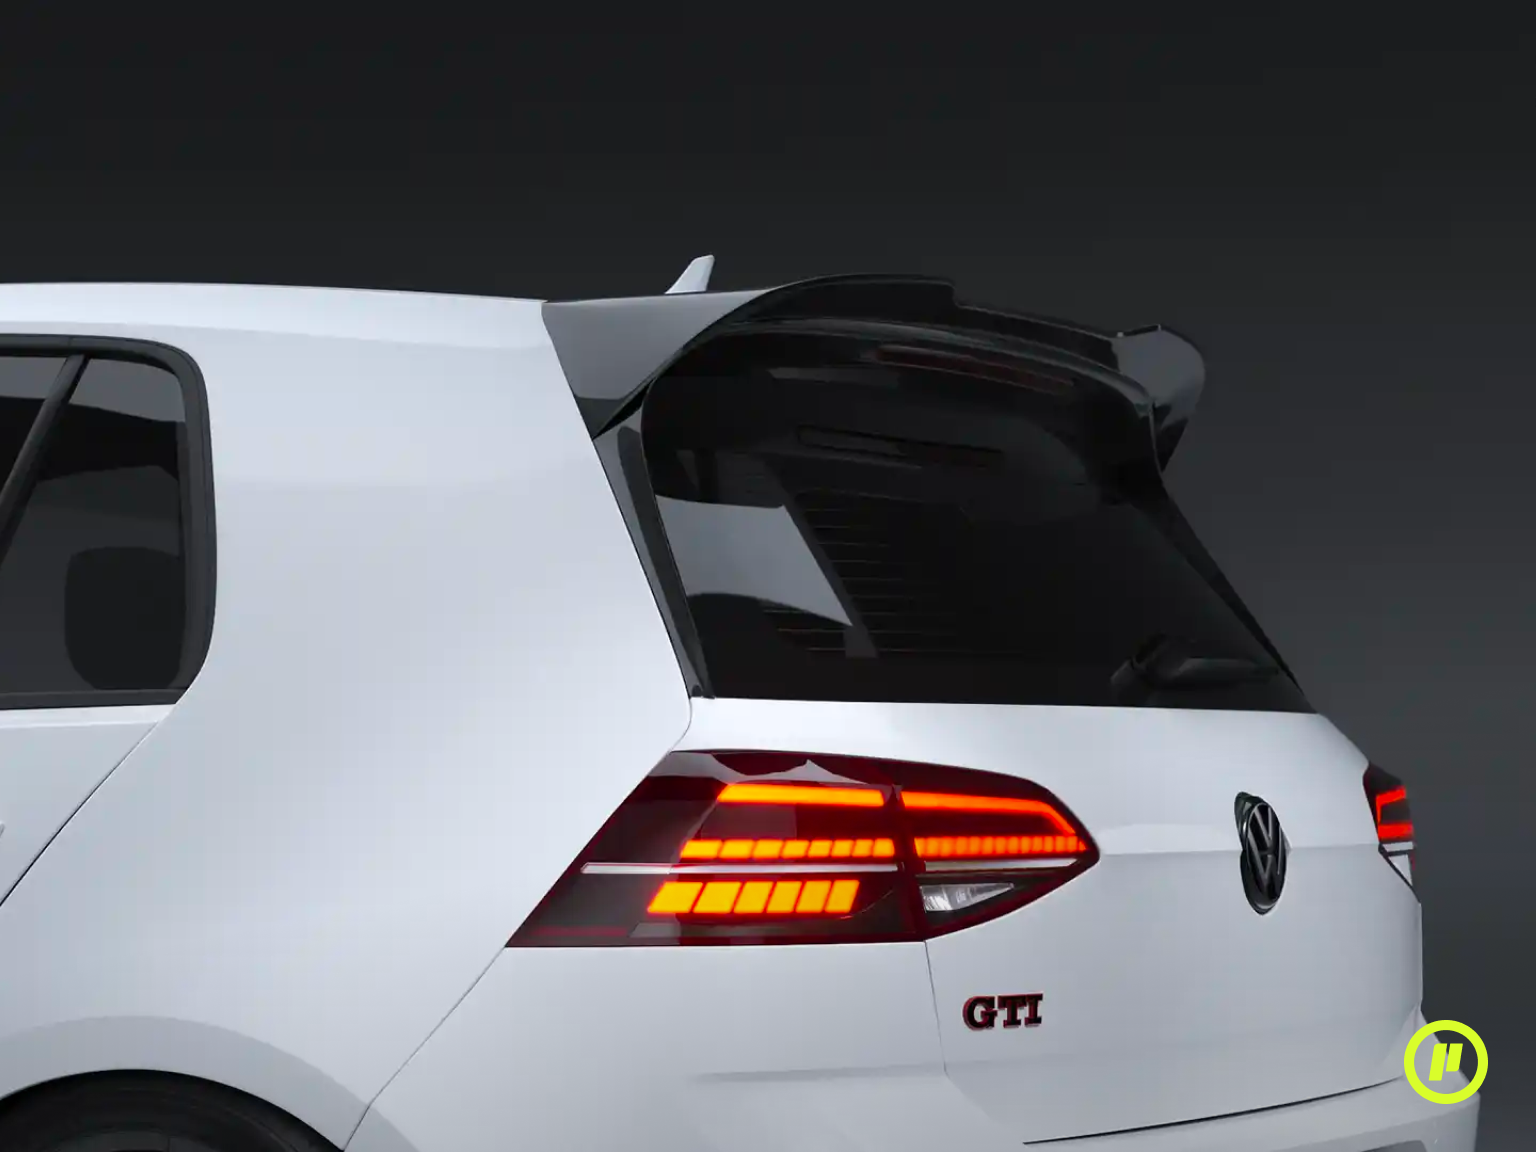 Zaero Design - EVO-1 Heckspoiler für VW Golf 7 (GTI / GTD / R / R-Line 2012 - 2020)